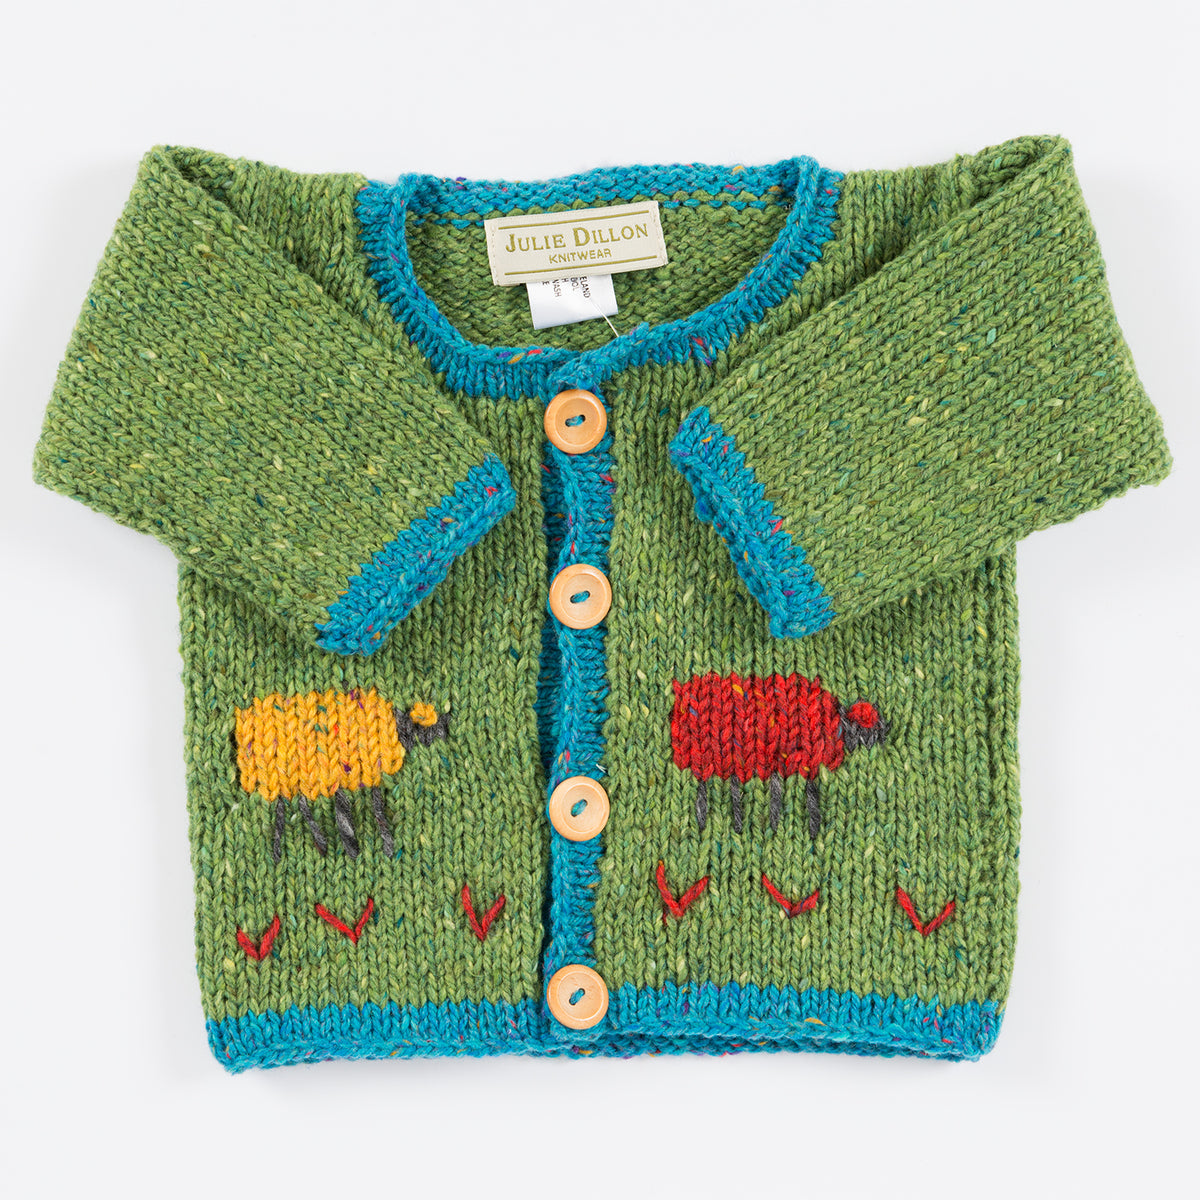 Handknitted Baby Cardigan - Green with Rainbow Sheep motif